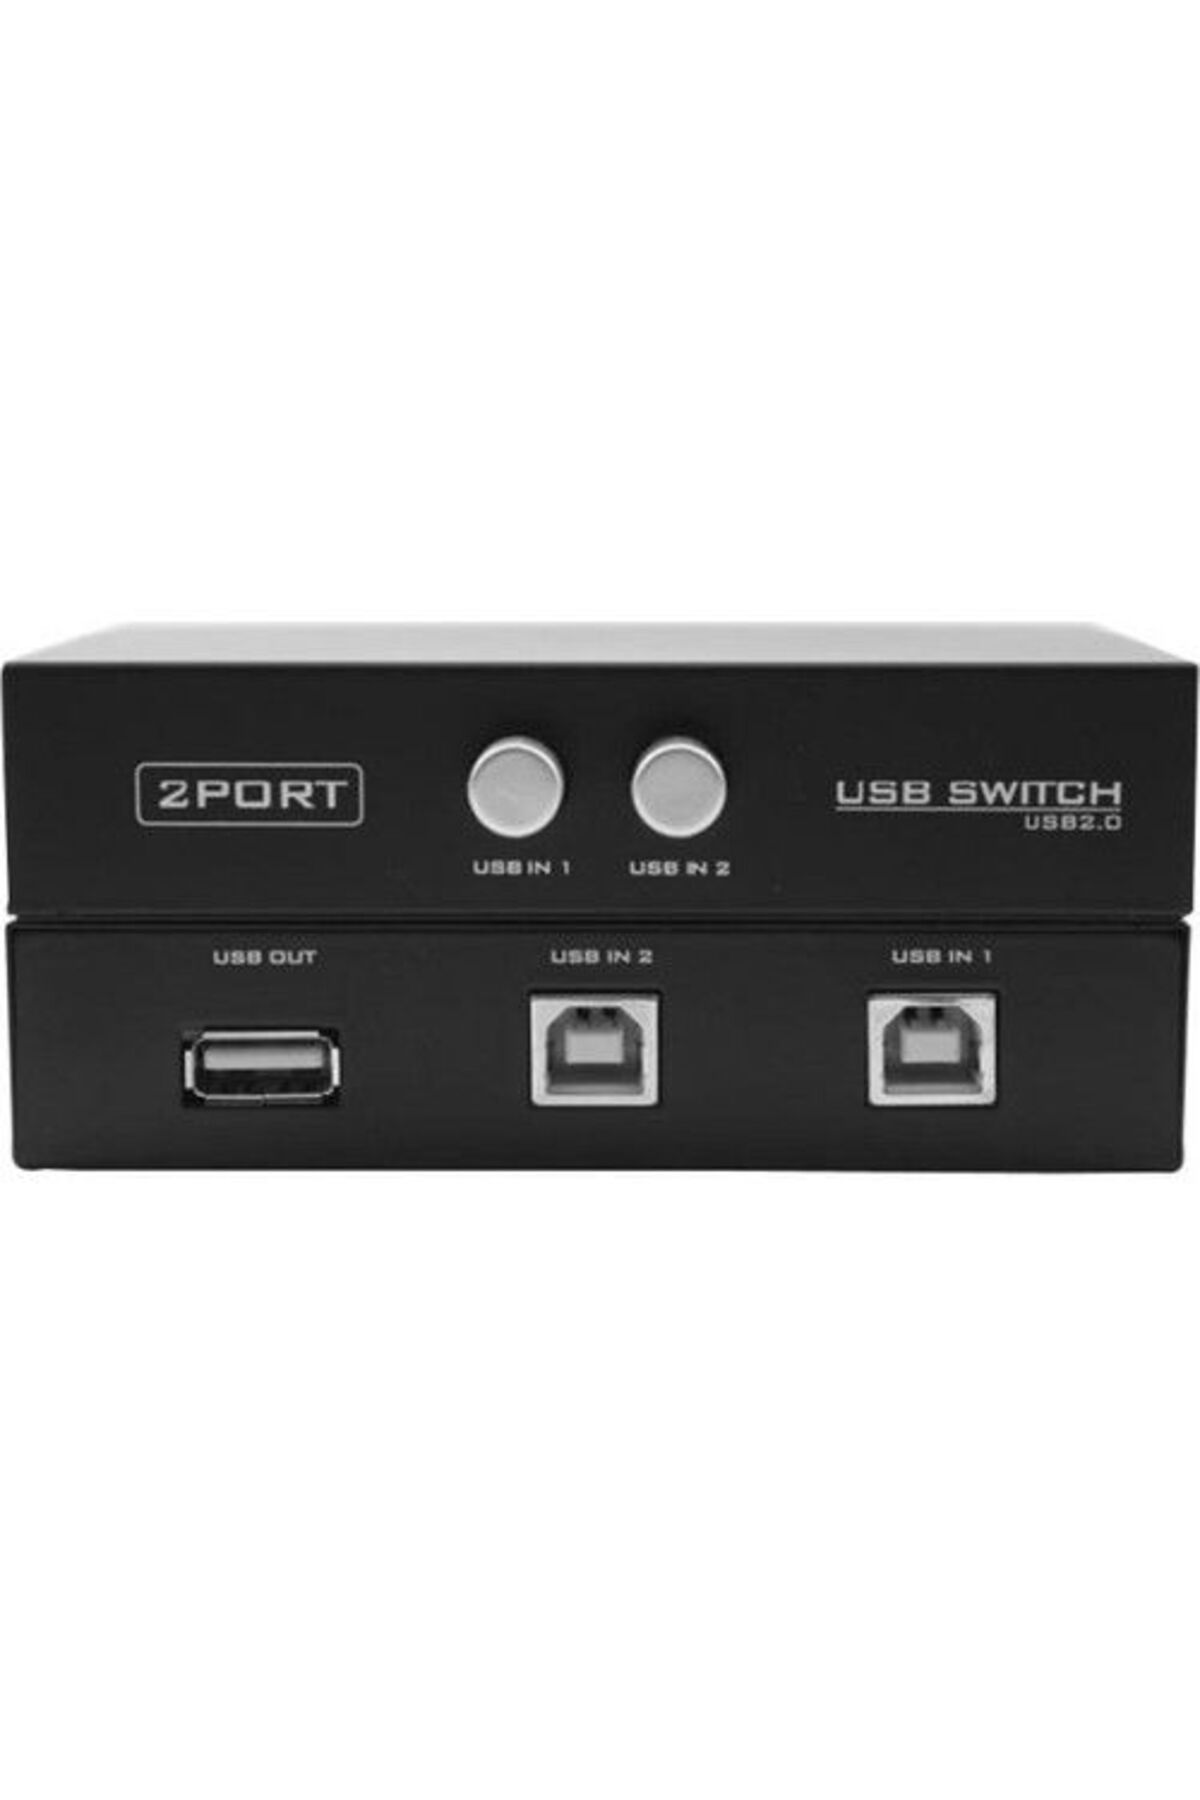 Usb v 2.0. USB Switch 2 Port для принтера. USB 2.0 Switch переключатель на 2 порта. Switch переключатель на 2 порта для принтера. USB 2.0 Switch Hub Printer.